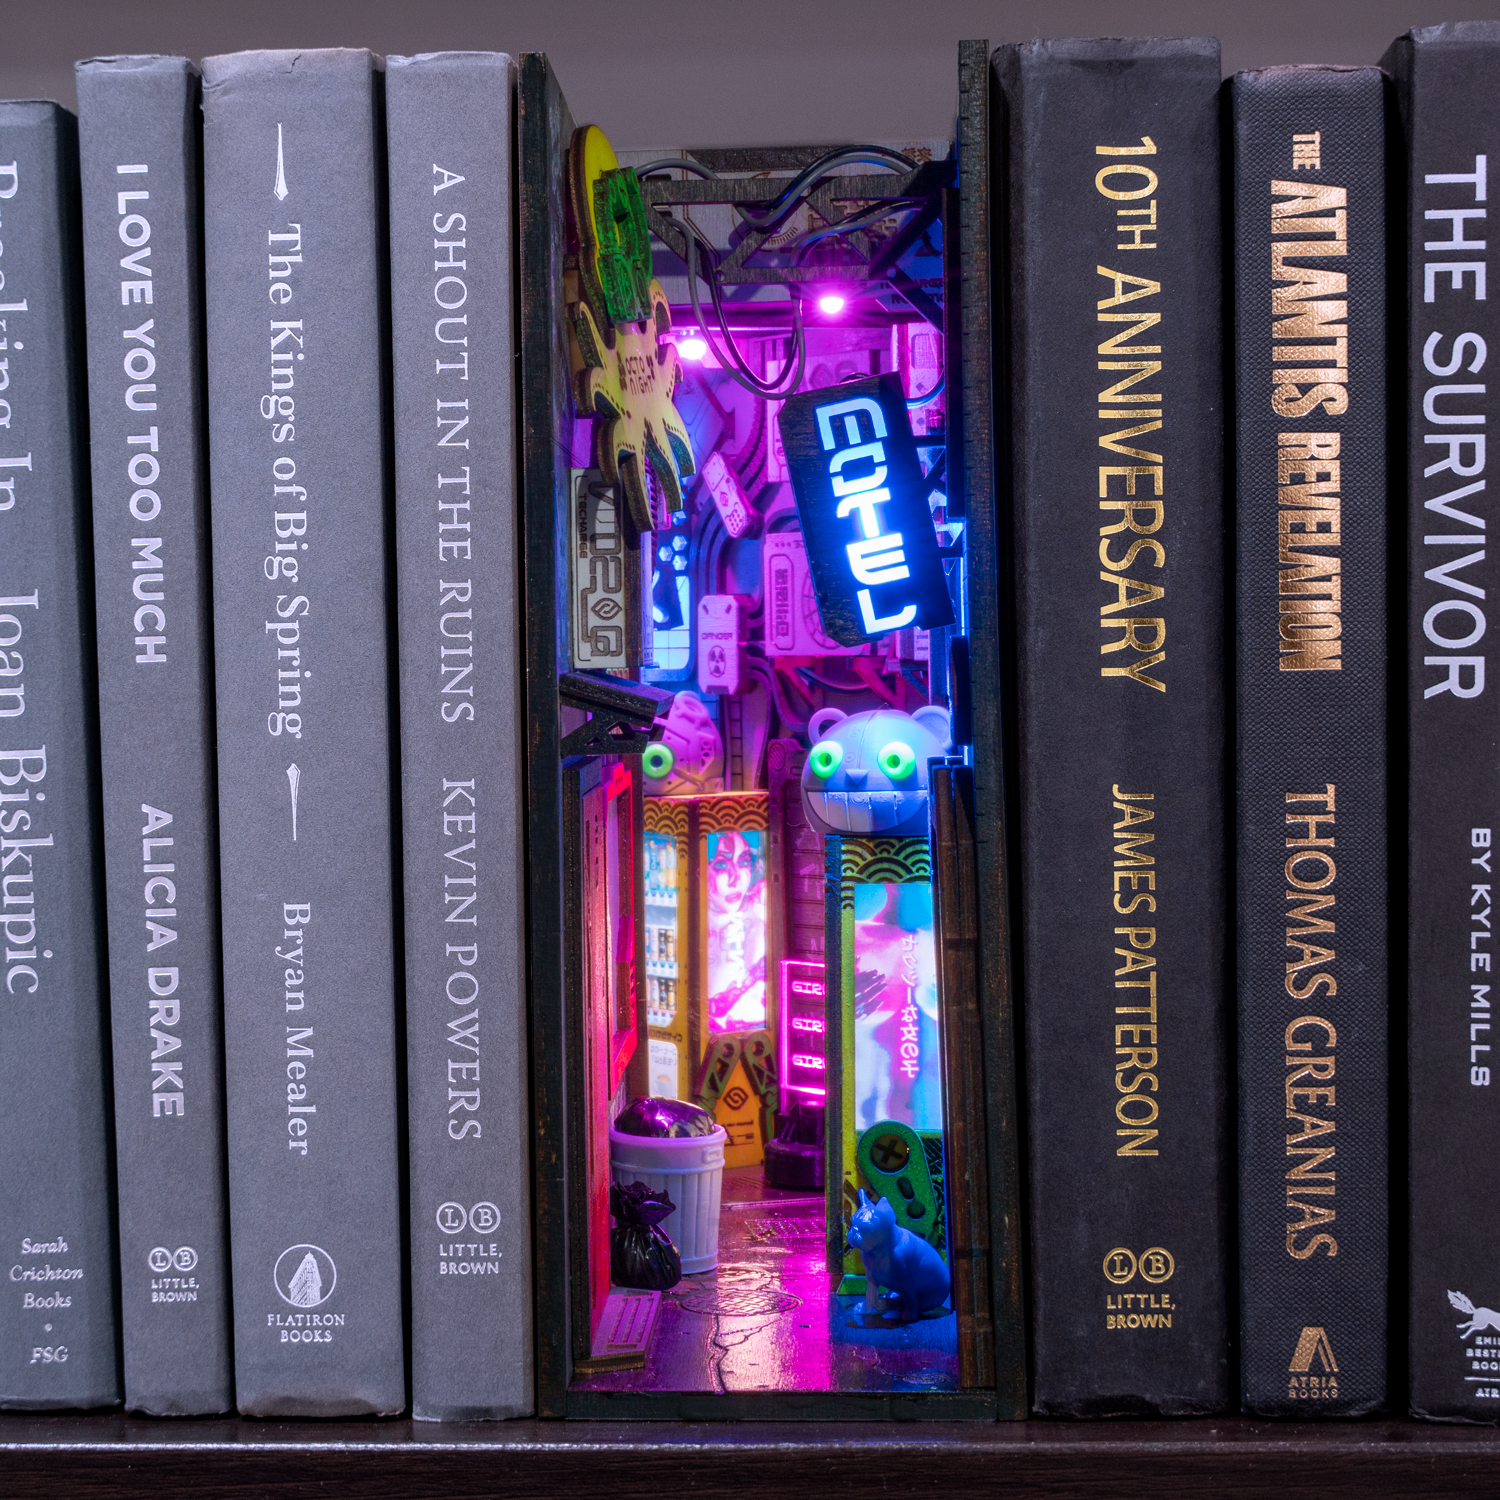 Booknook, Book Nook, Diorama. Book Alley Shelf Insert, Book Lover